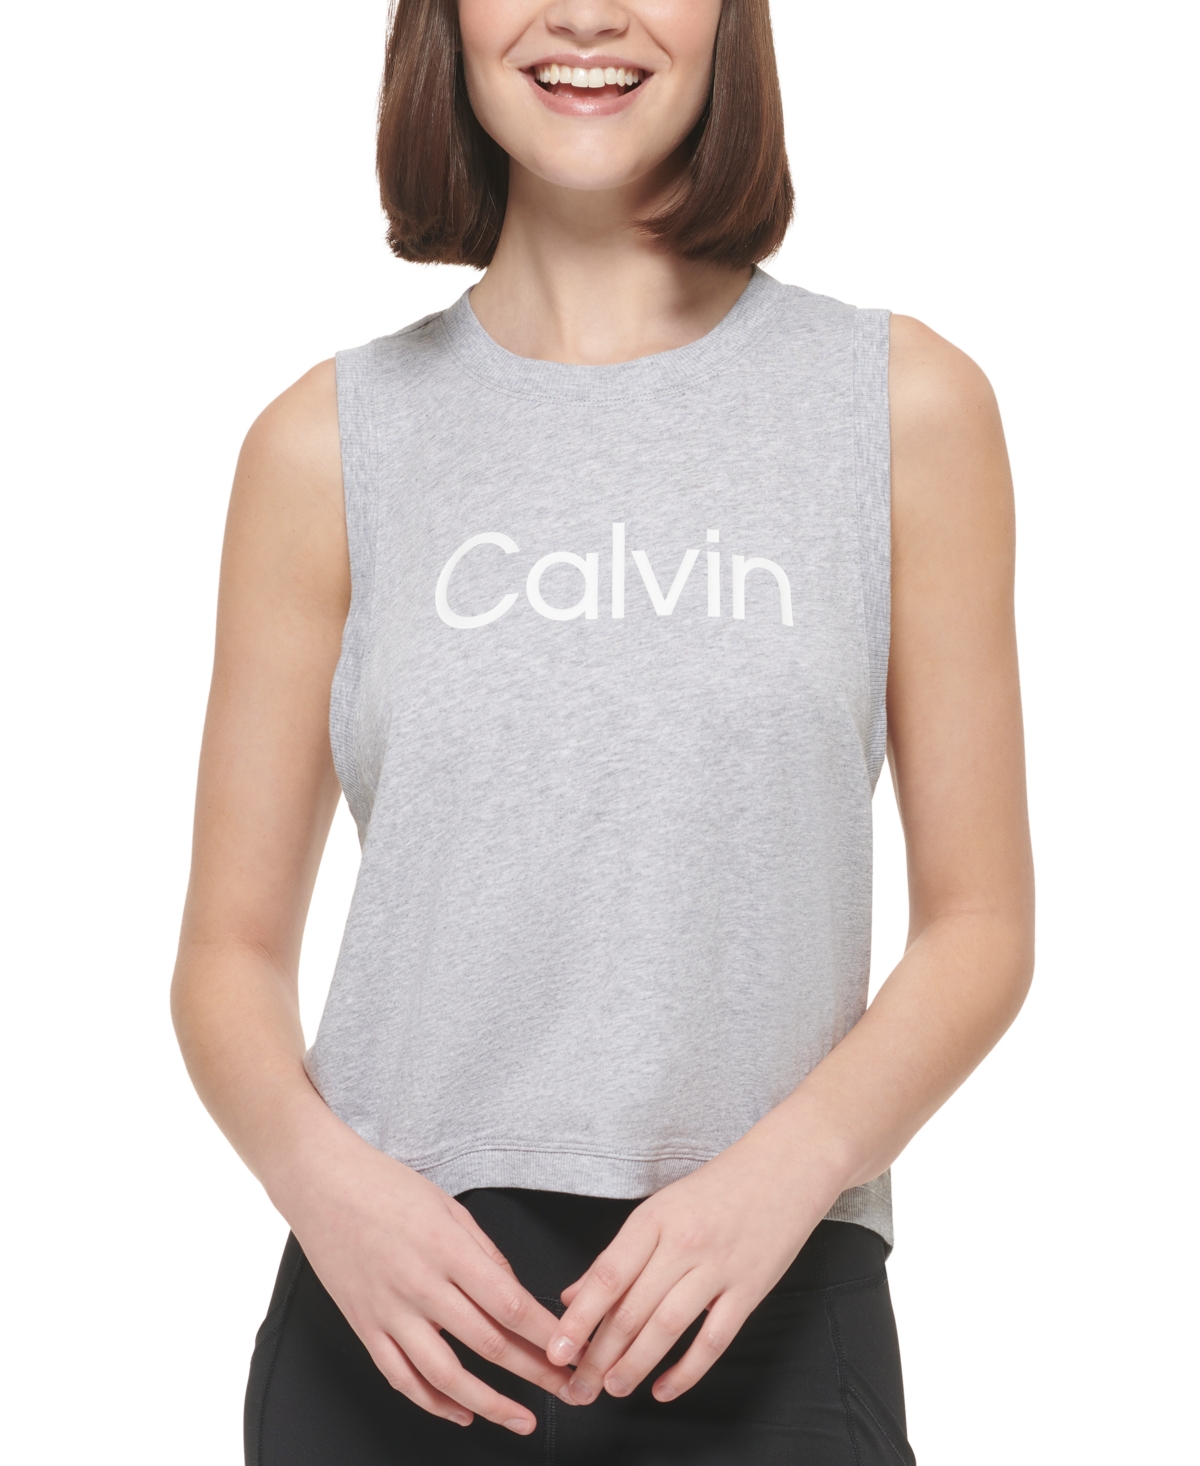 Calvin Klein Performance Women's Muscle Tank